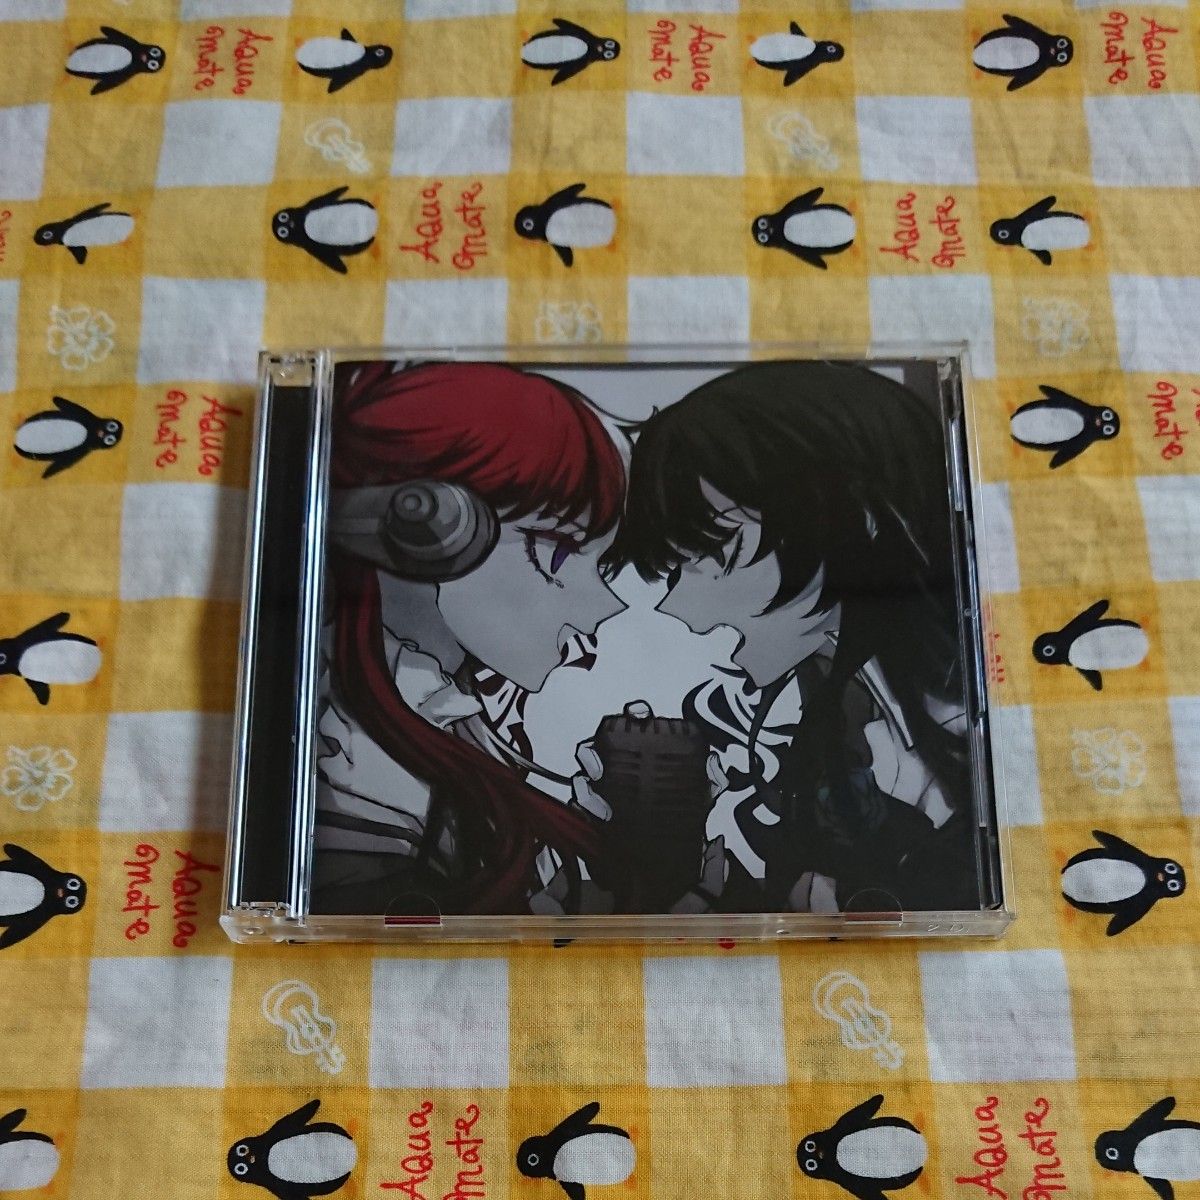 Ado ウタの歌 ONE PIECE FILM RED (初回限定盤) (DVD付) (特典:なし) CD DVD  ワンピース